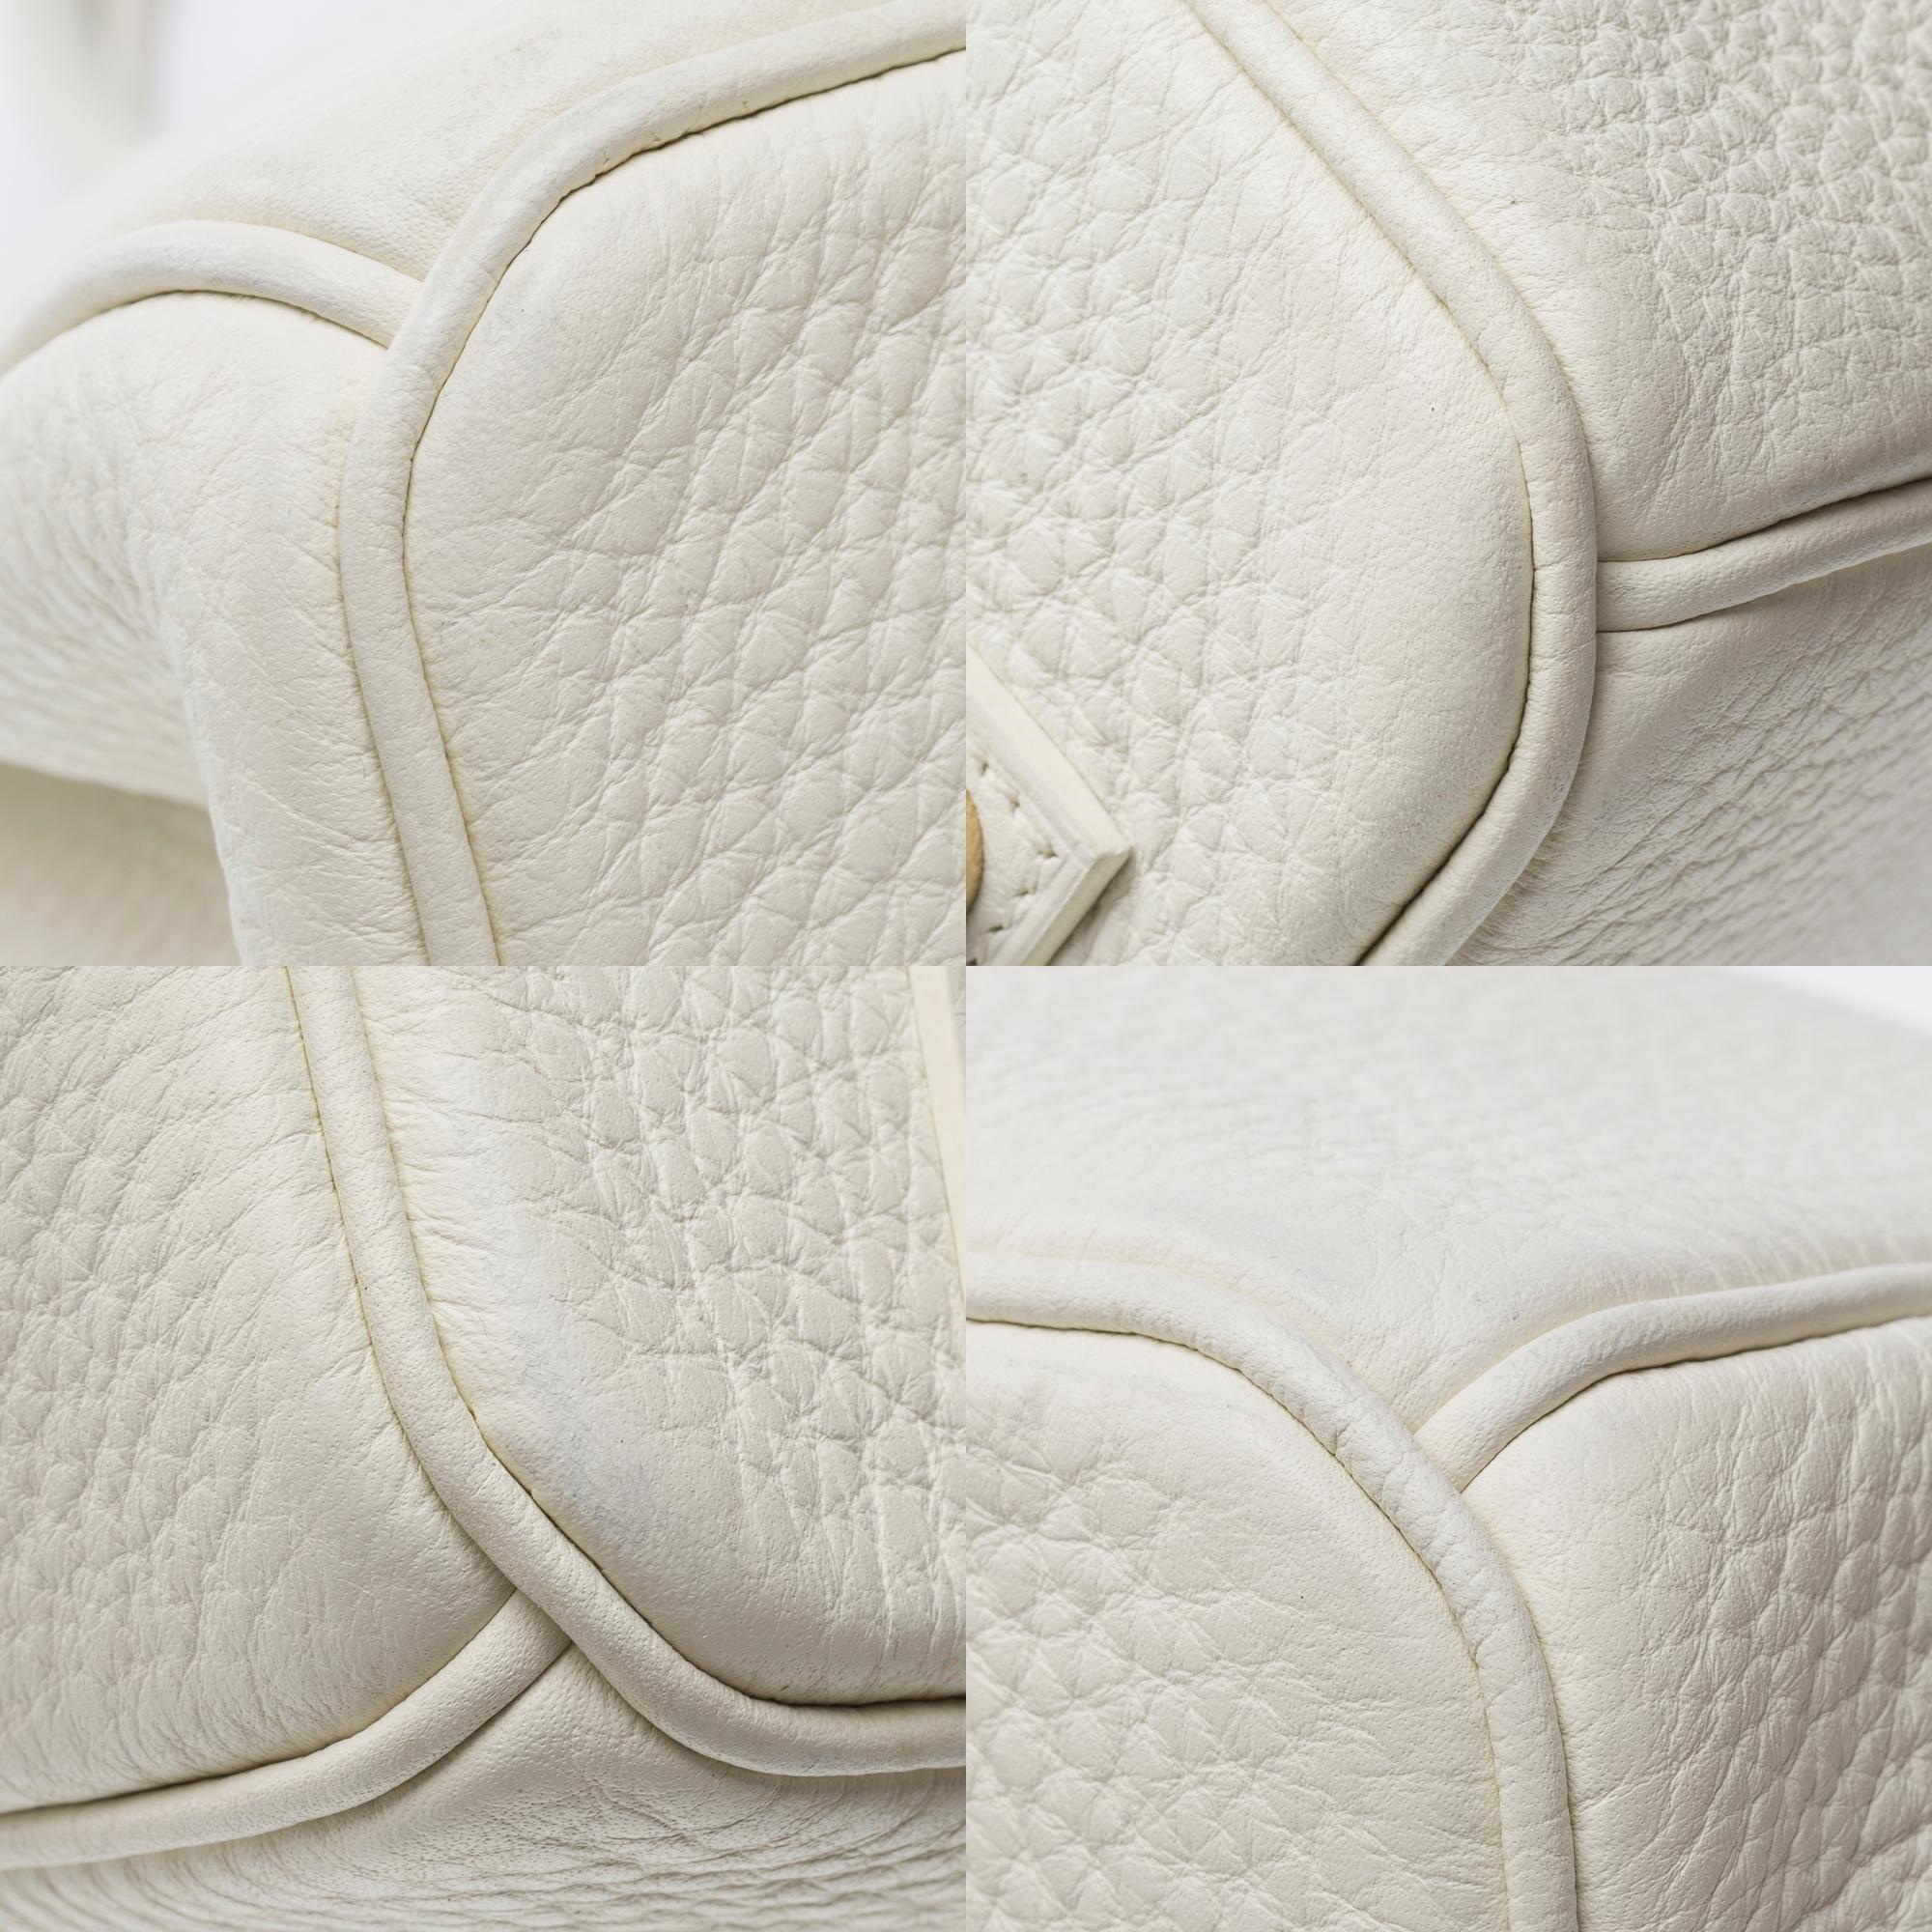 Stunning Hermès Birkin 35 handbag in White Taurillon Clemence leather, GHW 7